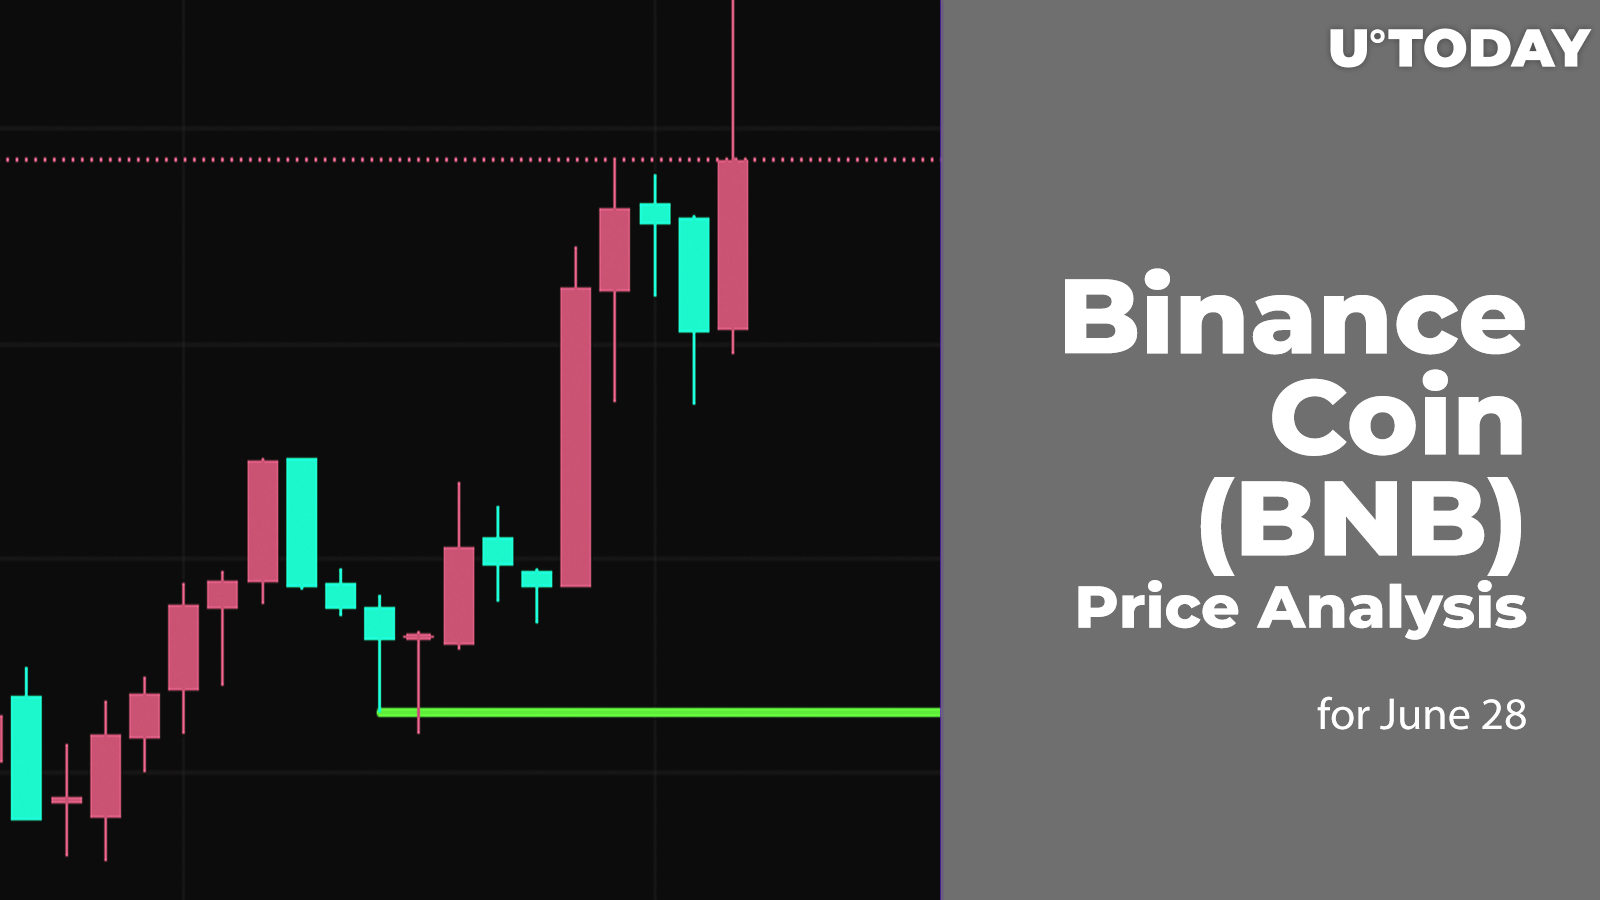 Binance Coin (BNB) Price Analysis for June 28